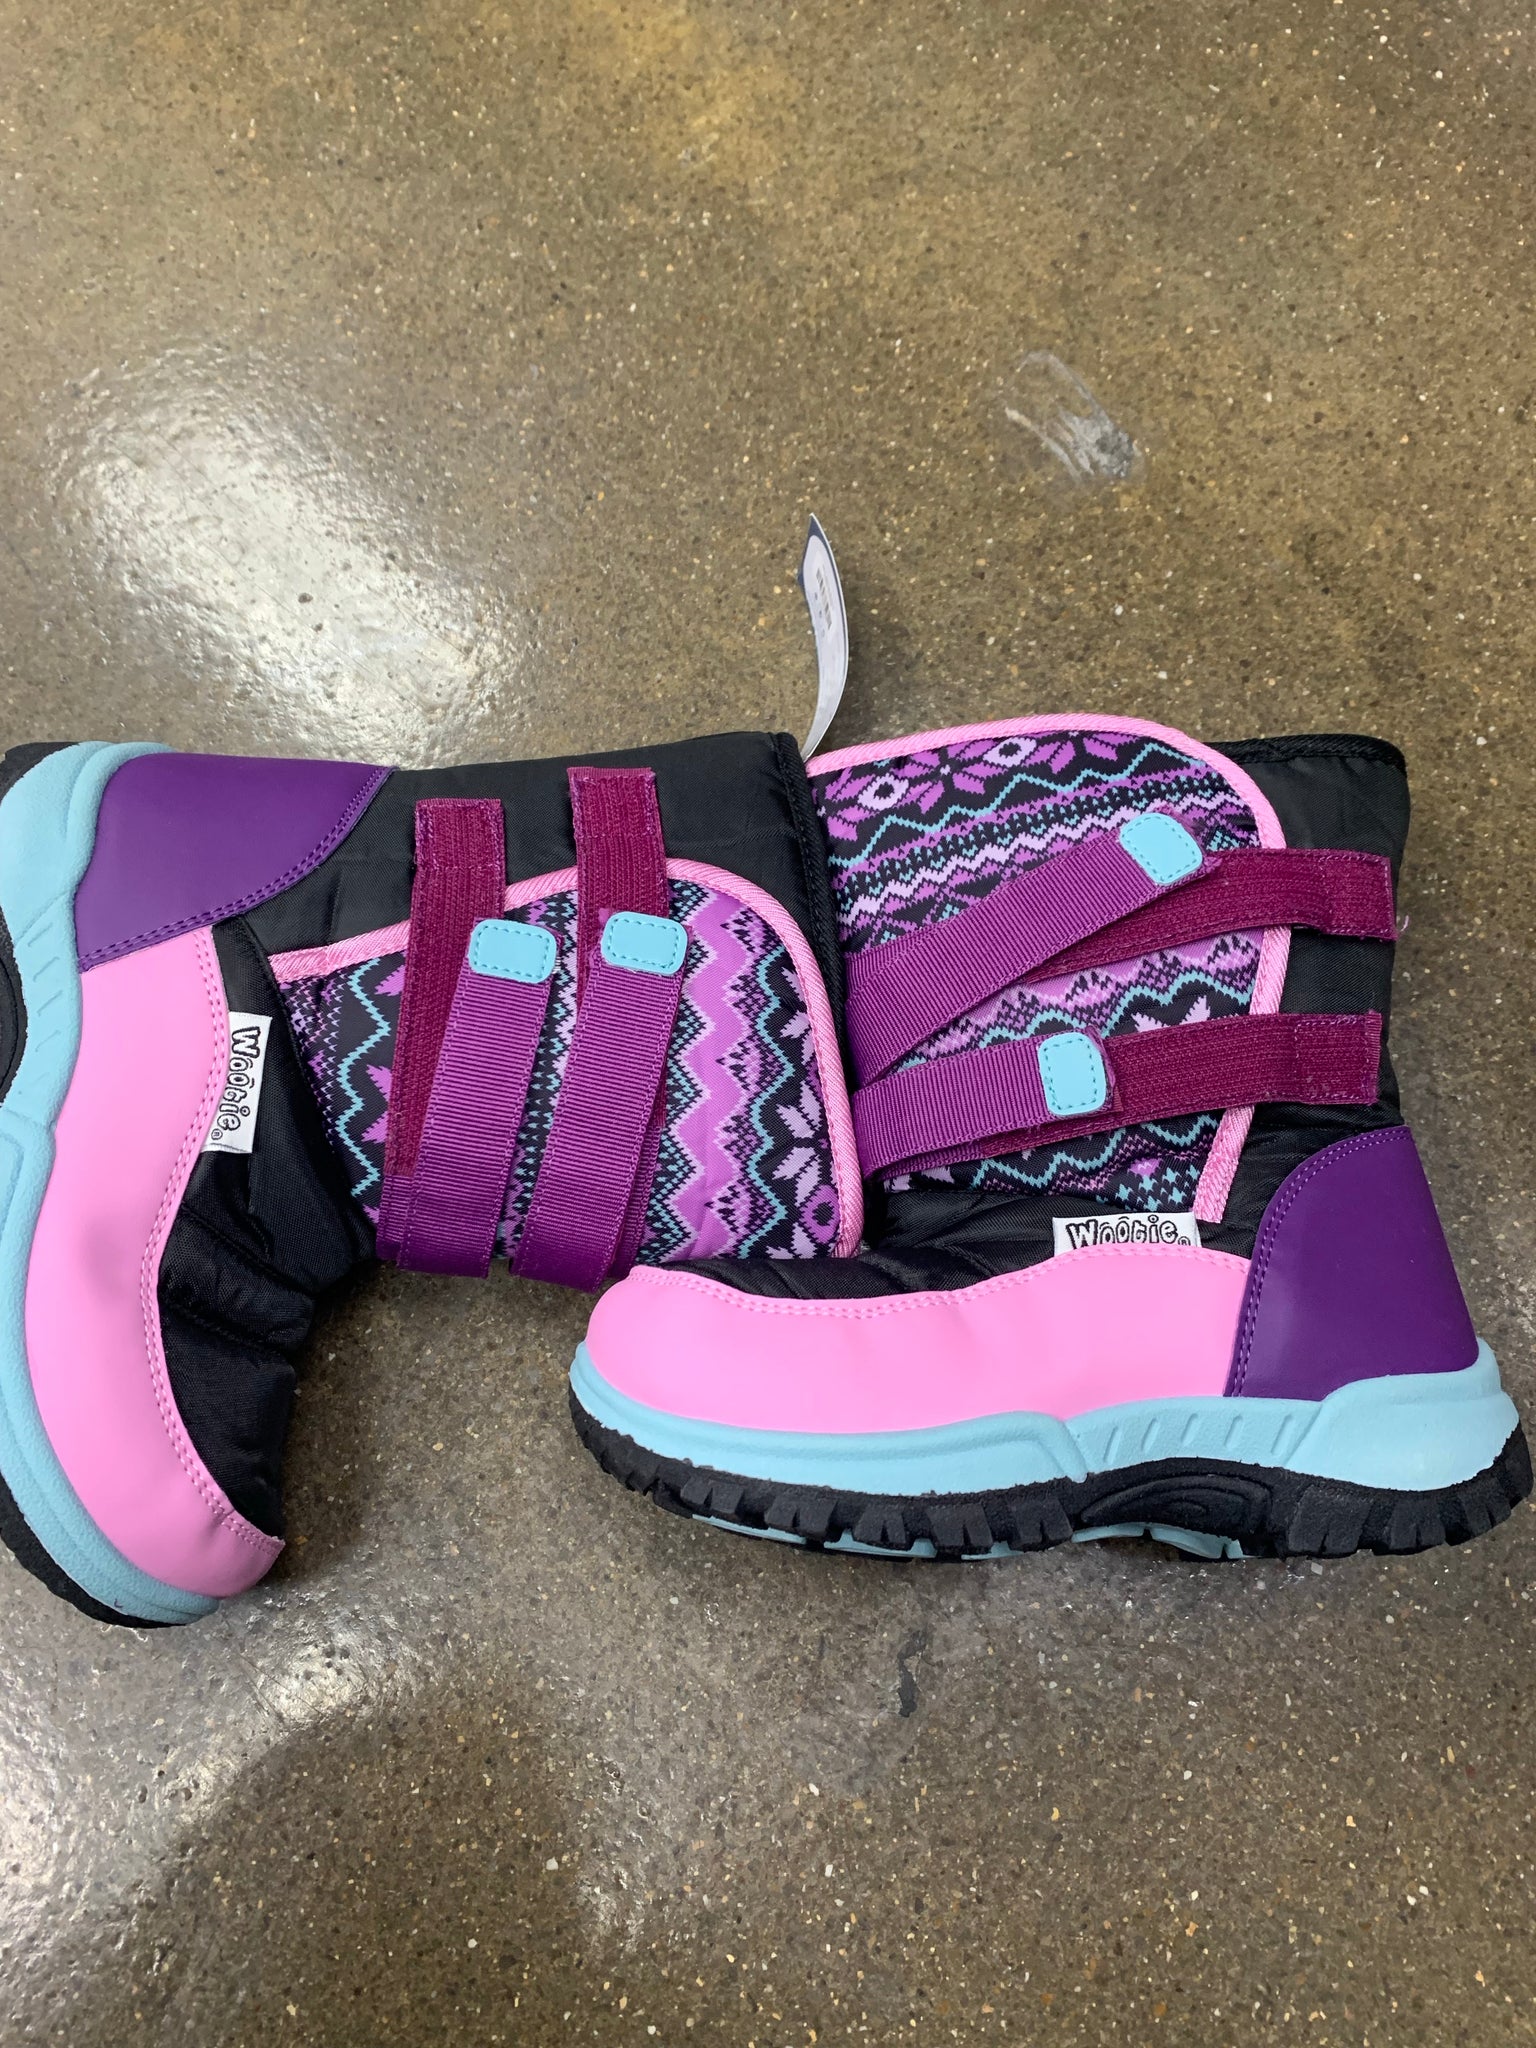 New Wootie winter boots purple 8